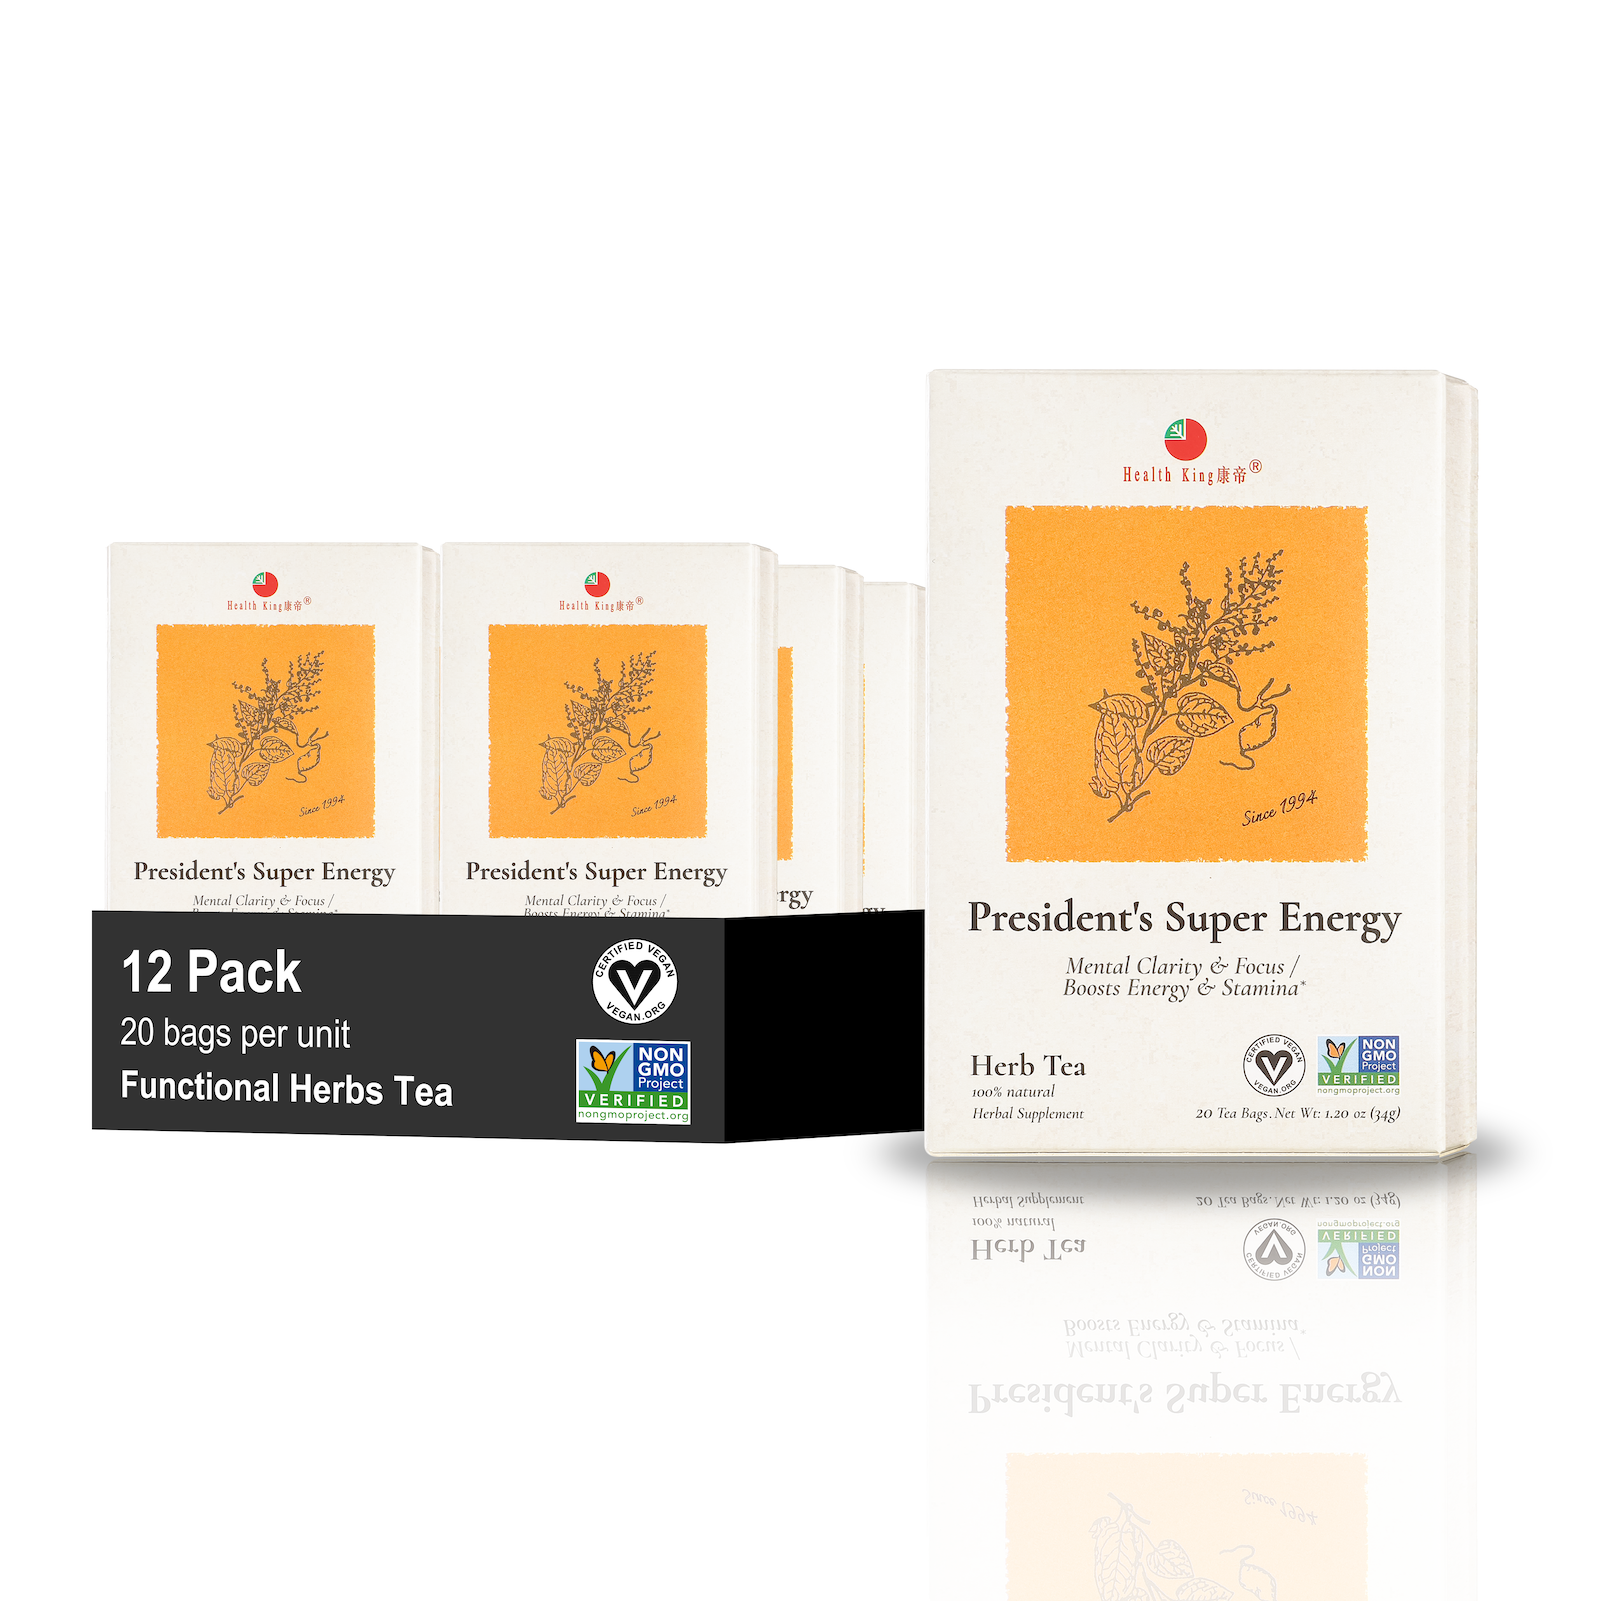 Packaging of President's Super Energy Herb Tea highlighting mental focus benefits